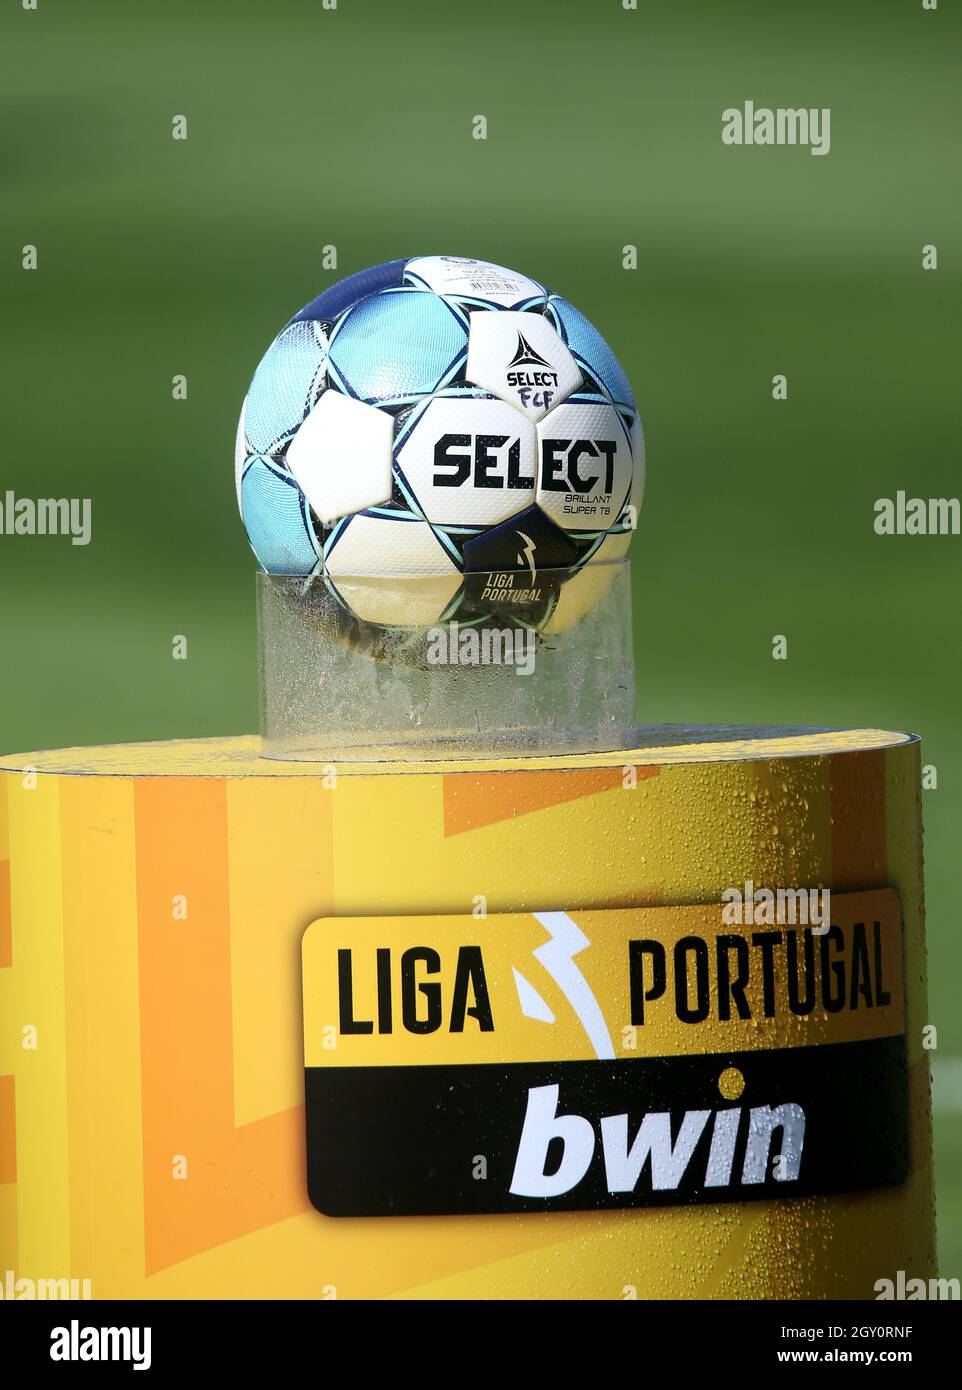 SELECT OFFICIAL LIGA NOS PORTUGAL MATCH BALL - Soccer Plus